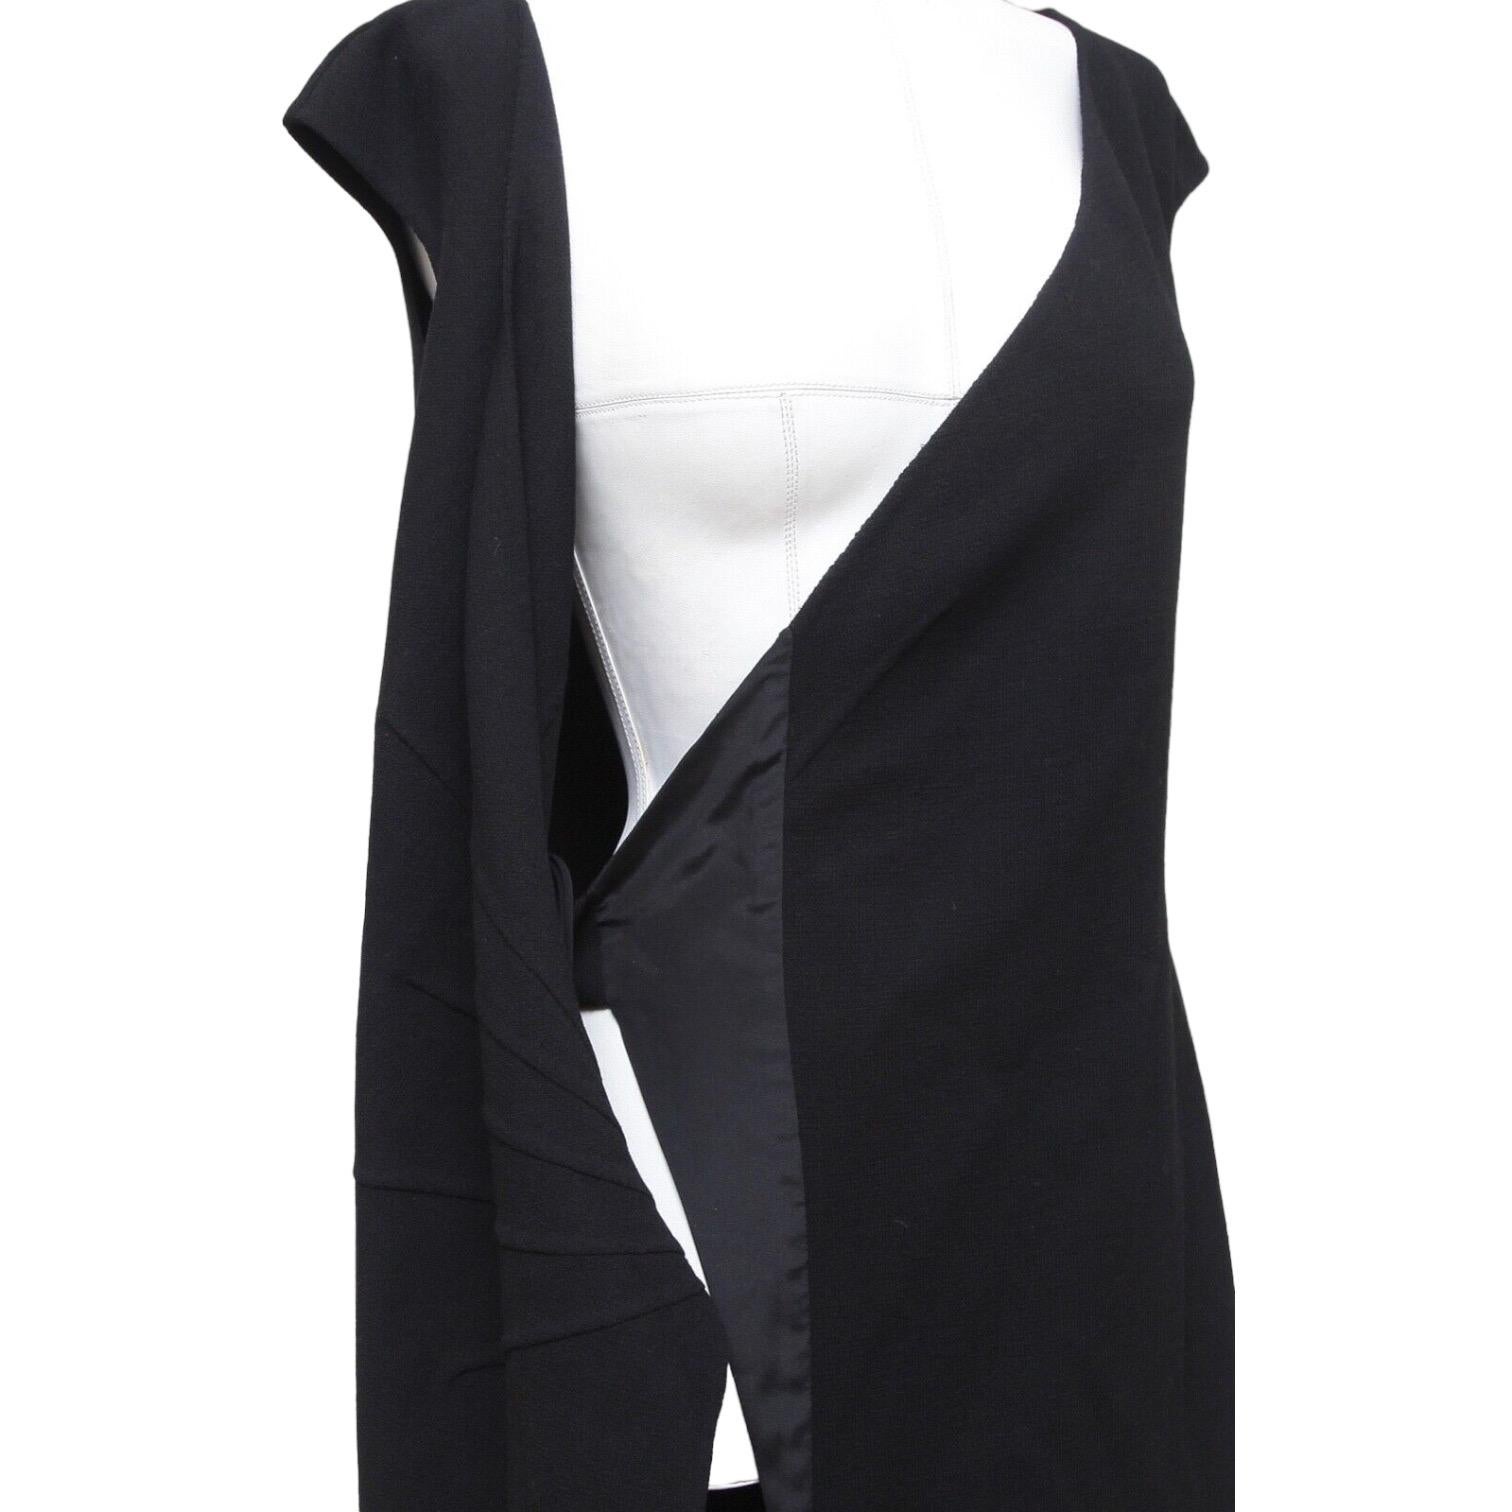 OSCAR DE LA RENTA Kleid Schwarz ärmellos Wrap Knit Sz 8 NWT $2190 im Angebot 2